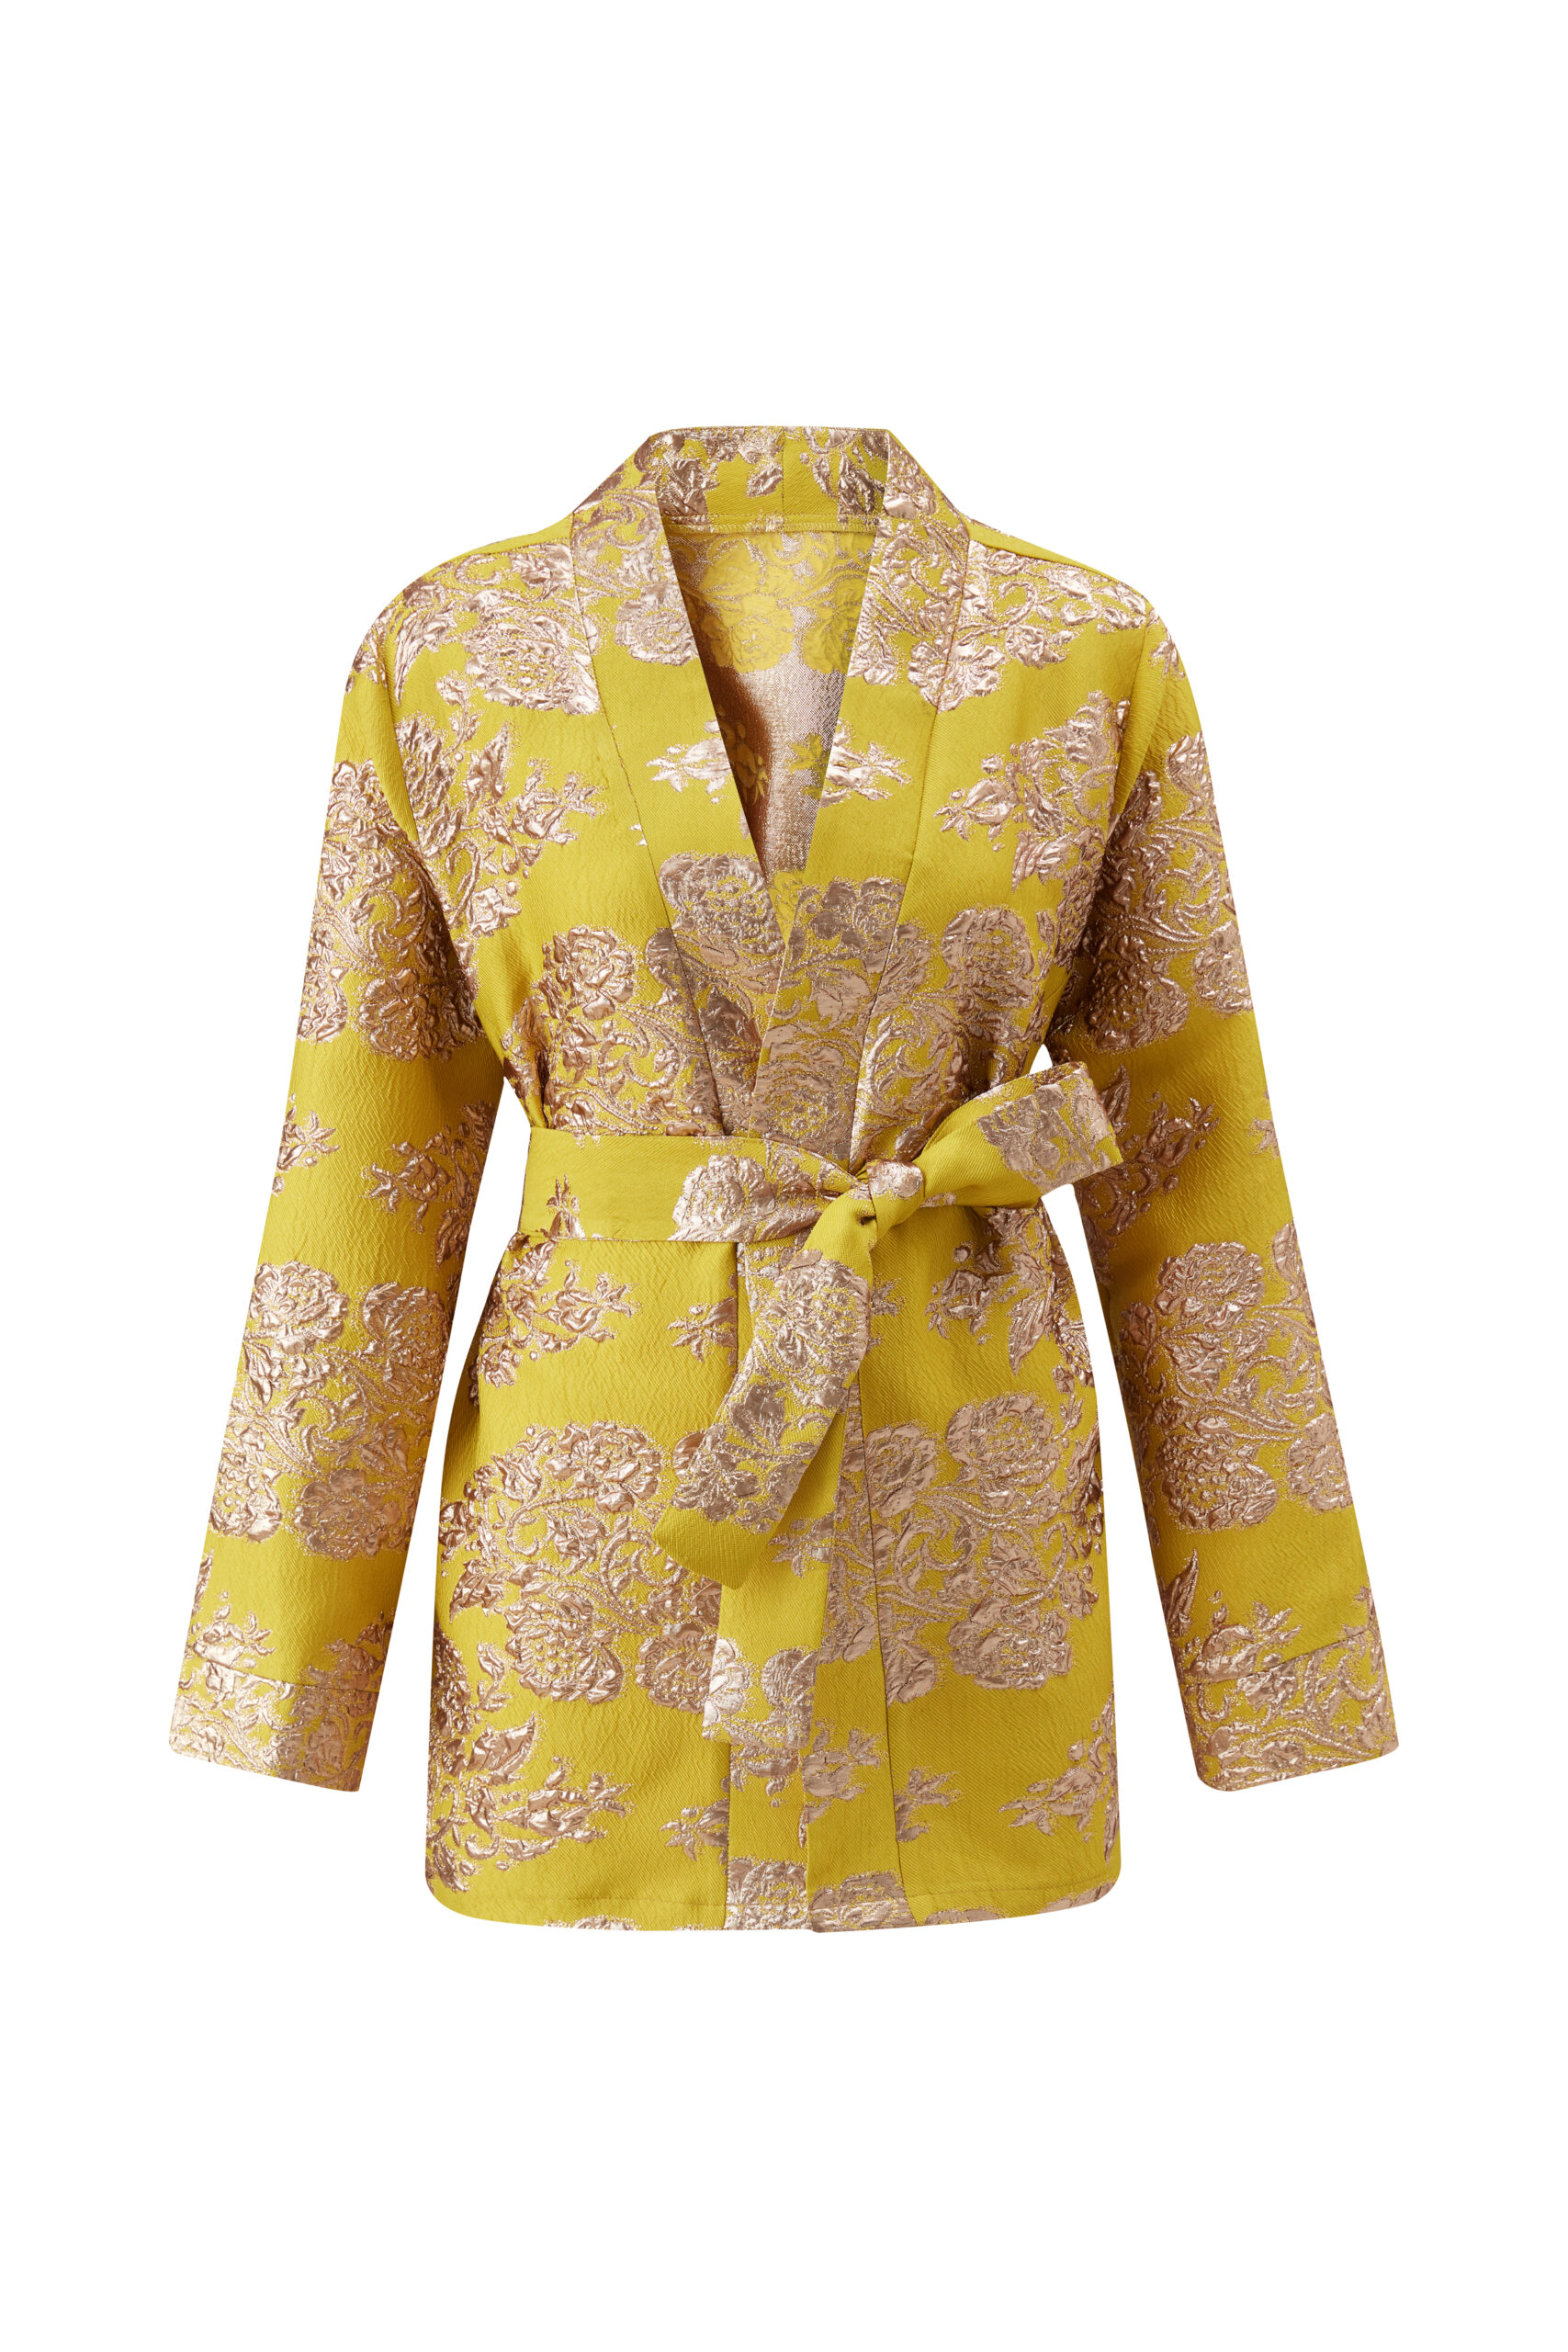 Studio Marais Jacquard – Yellow Pearl Kimono